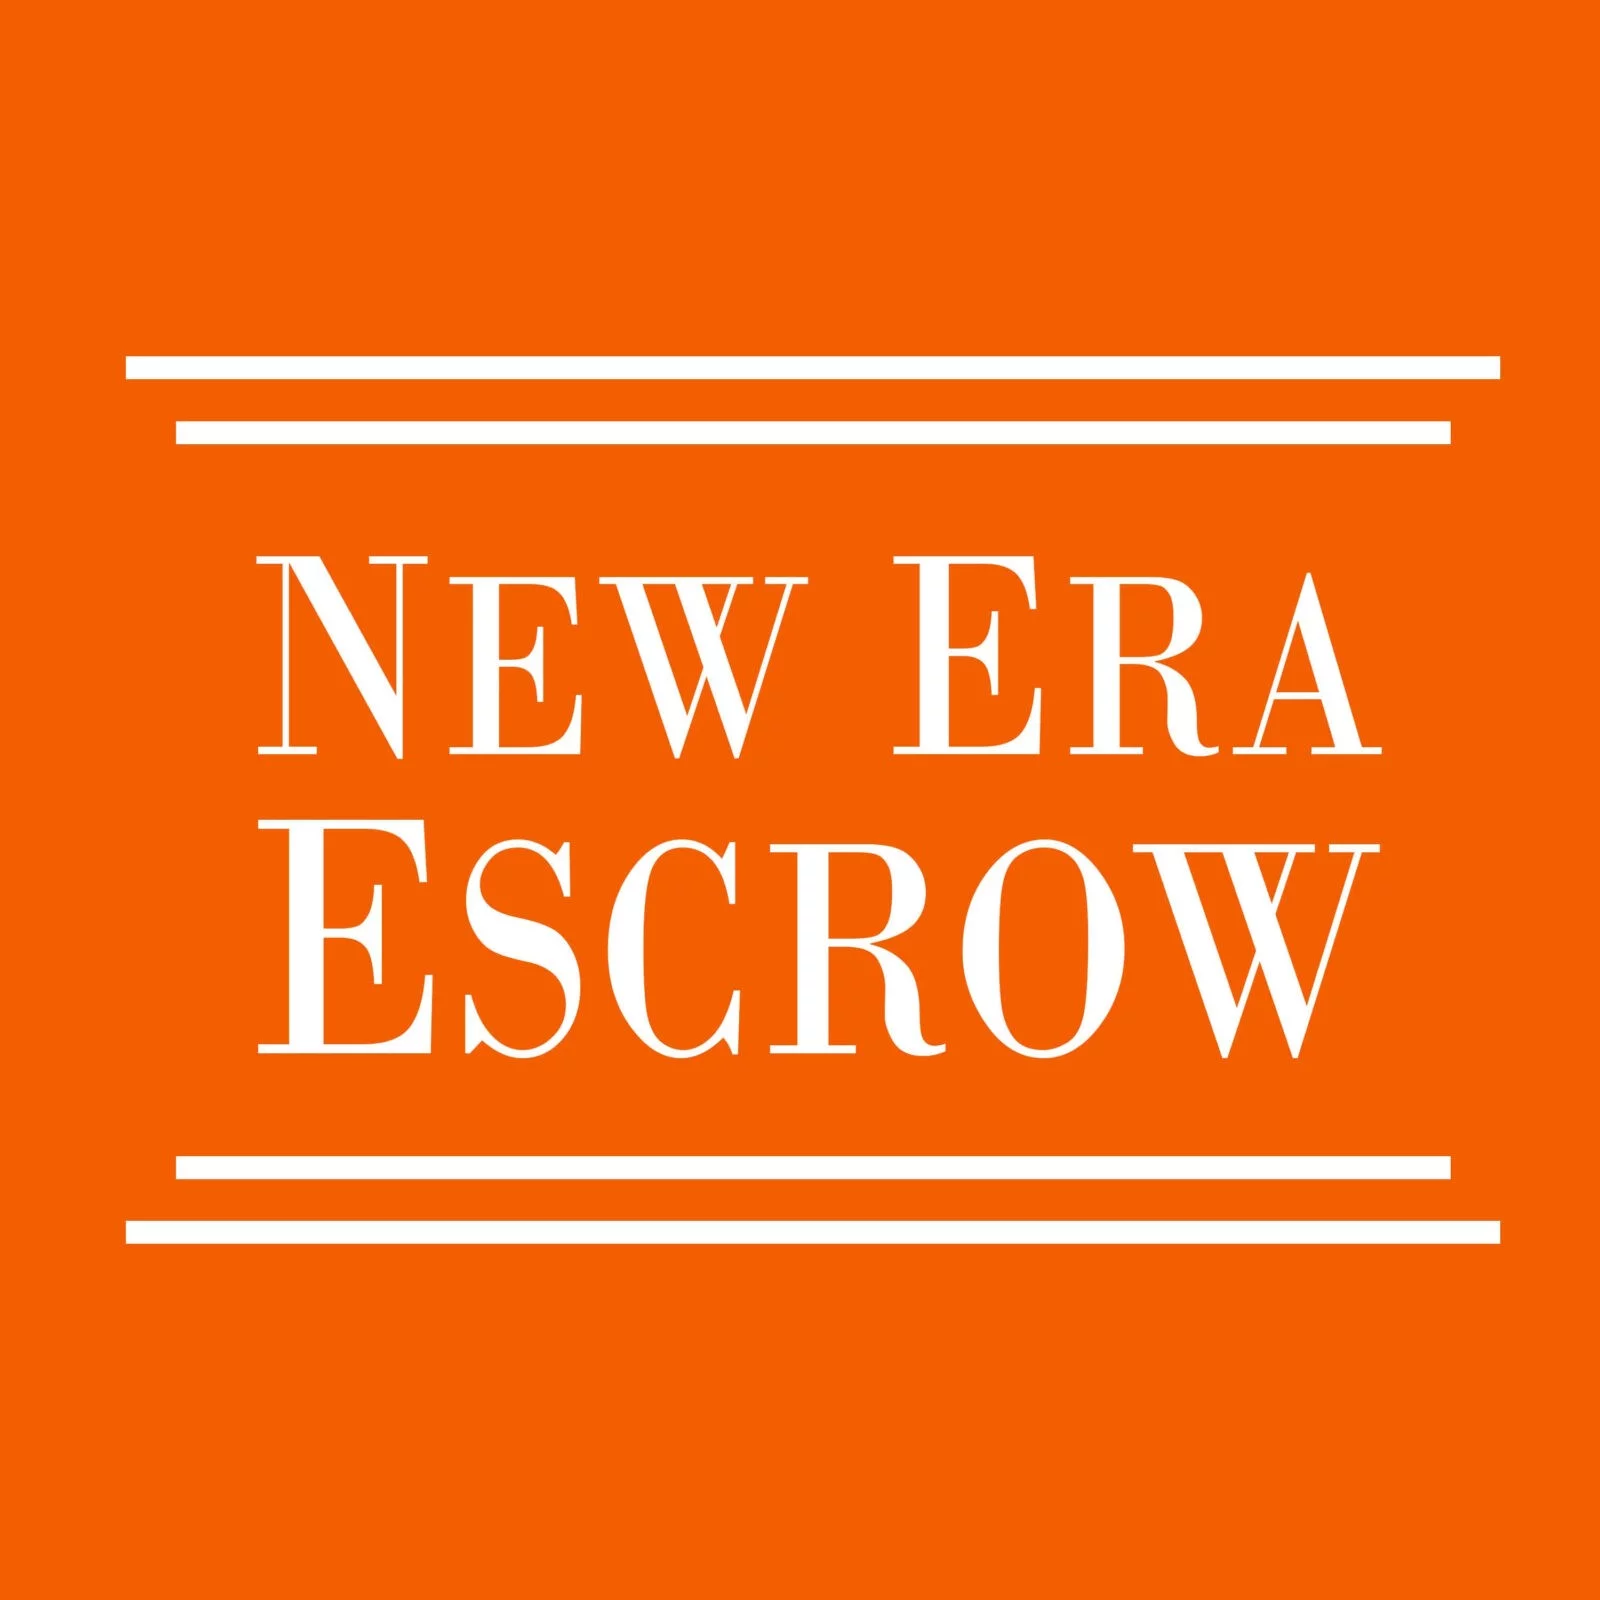 New Branch Manager - Premier Escrow Service Company - Short Sale Escrow Services